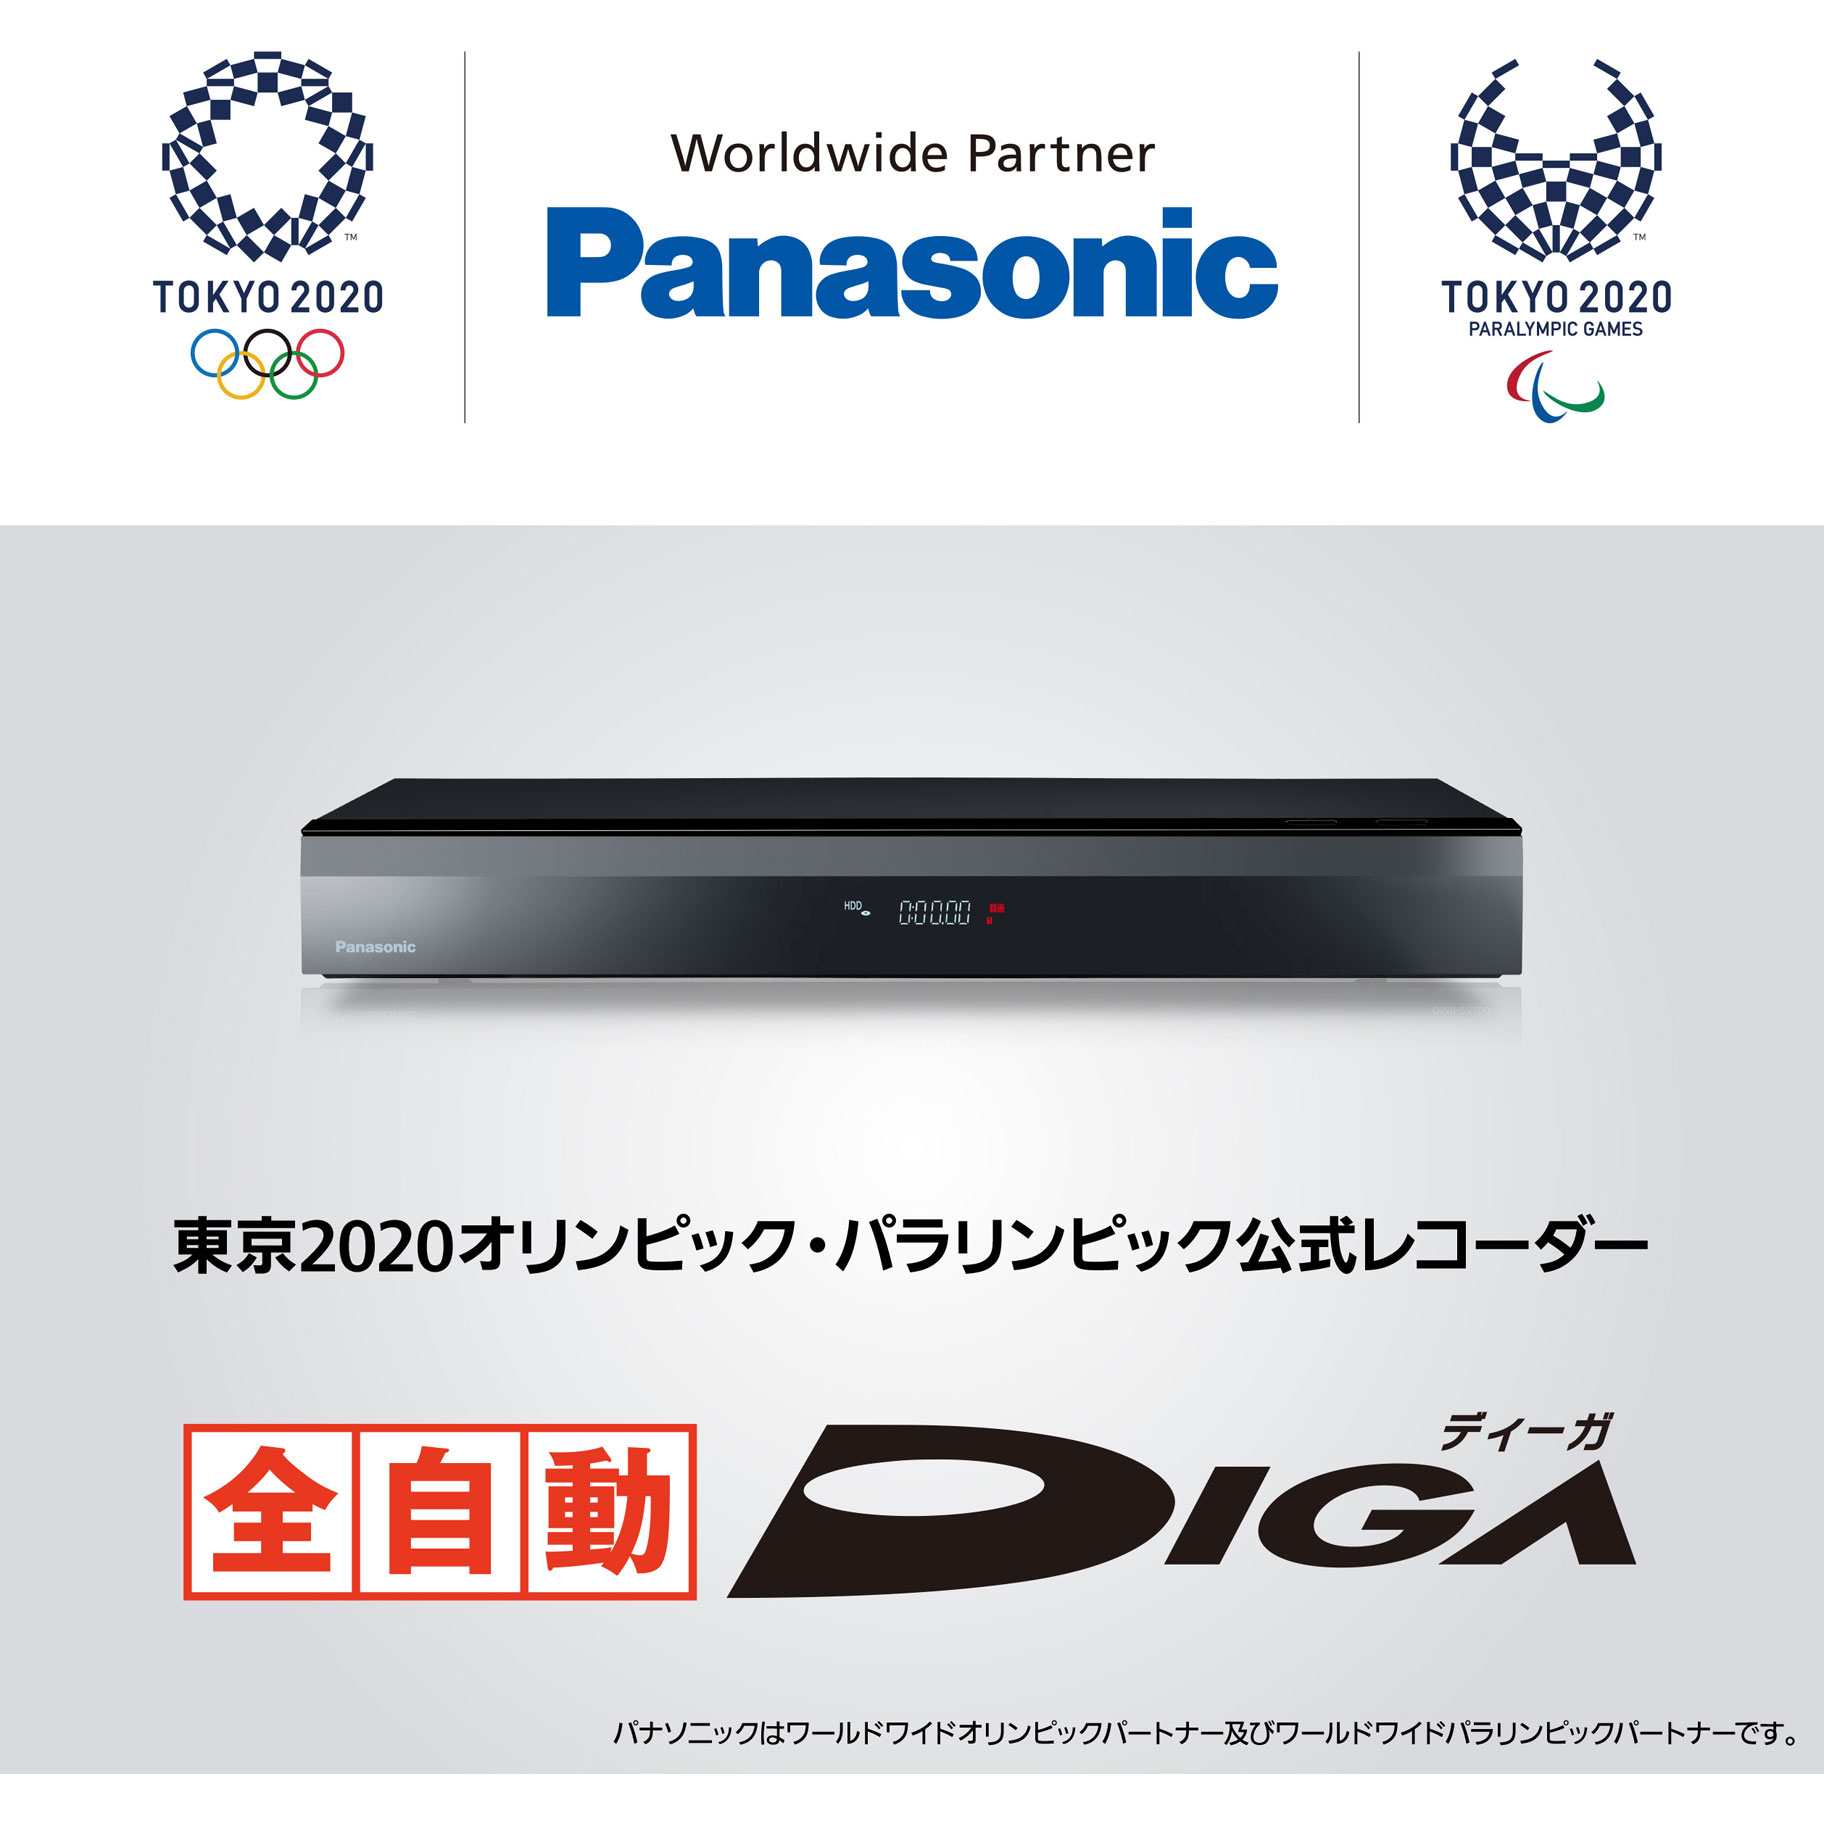 Panasonic 全自動 DIGA DMR-2X301